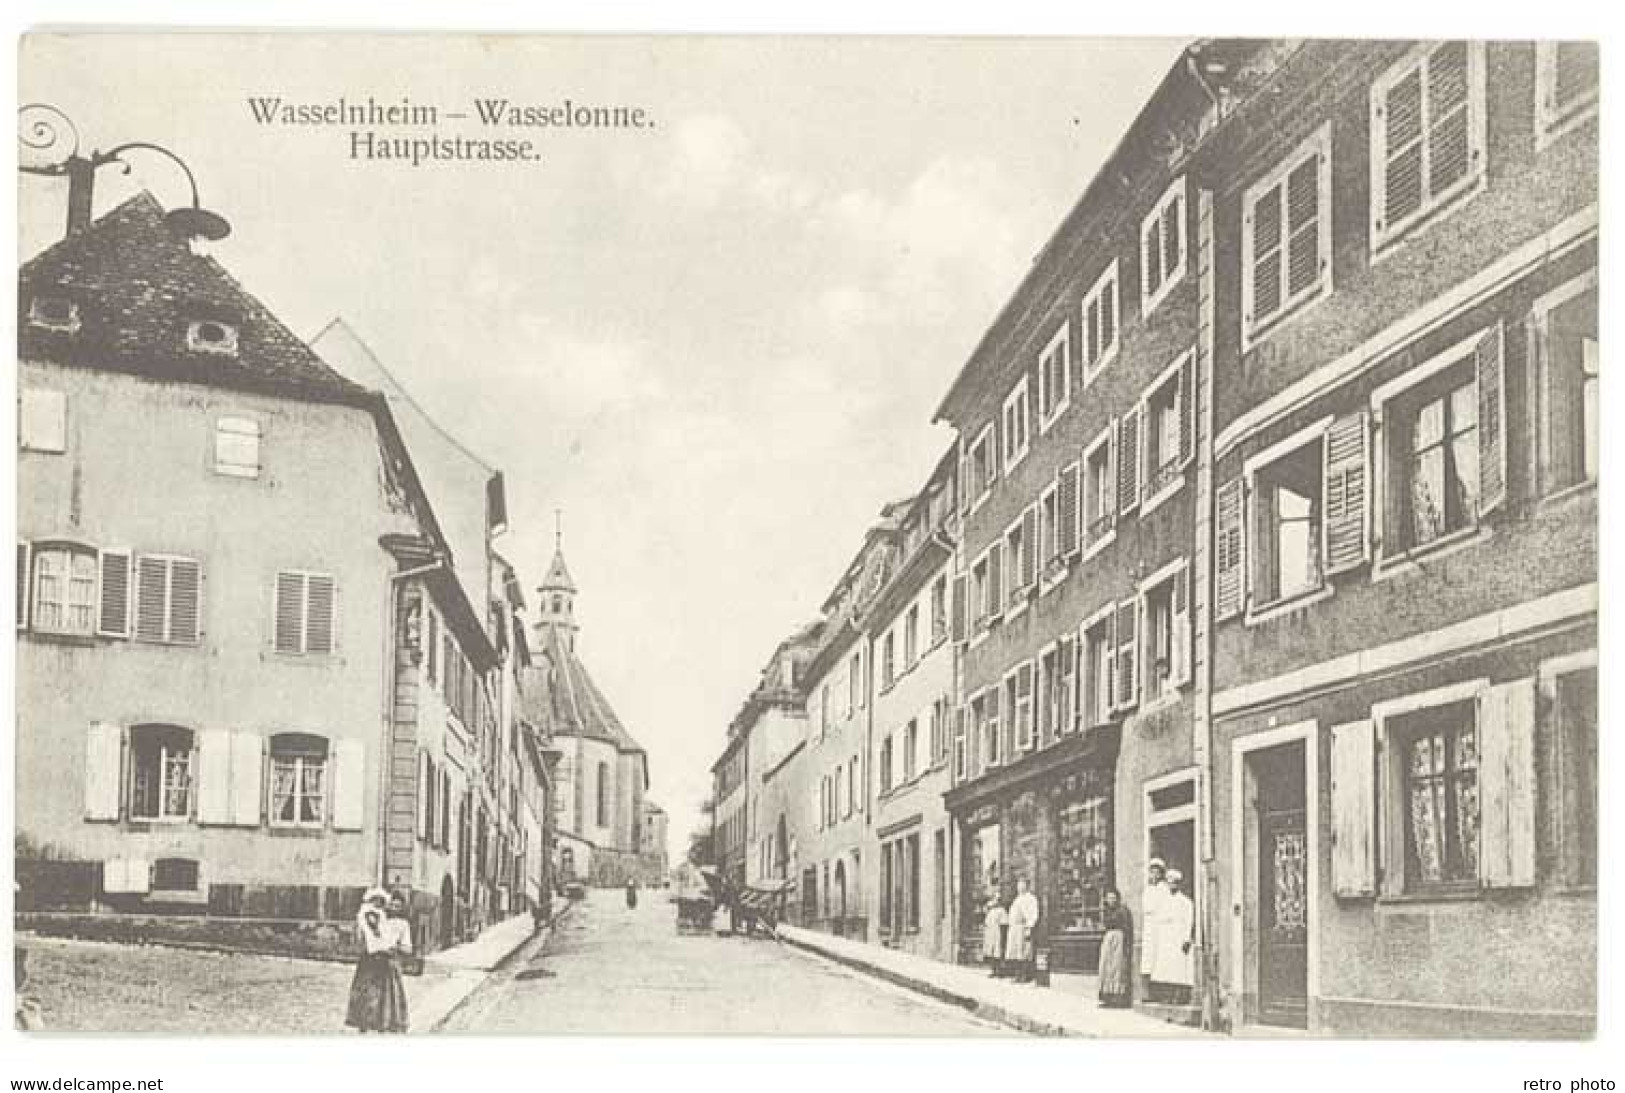 3 Cpa Alsace - Wasselnheim - Wasselonne Spital - Hôpital / Hauptstrasse / Brunngasse - Wasselonne